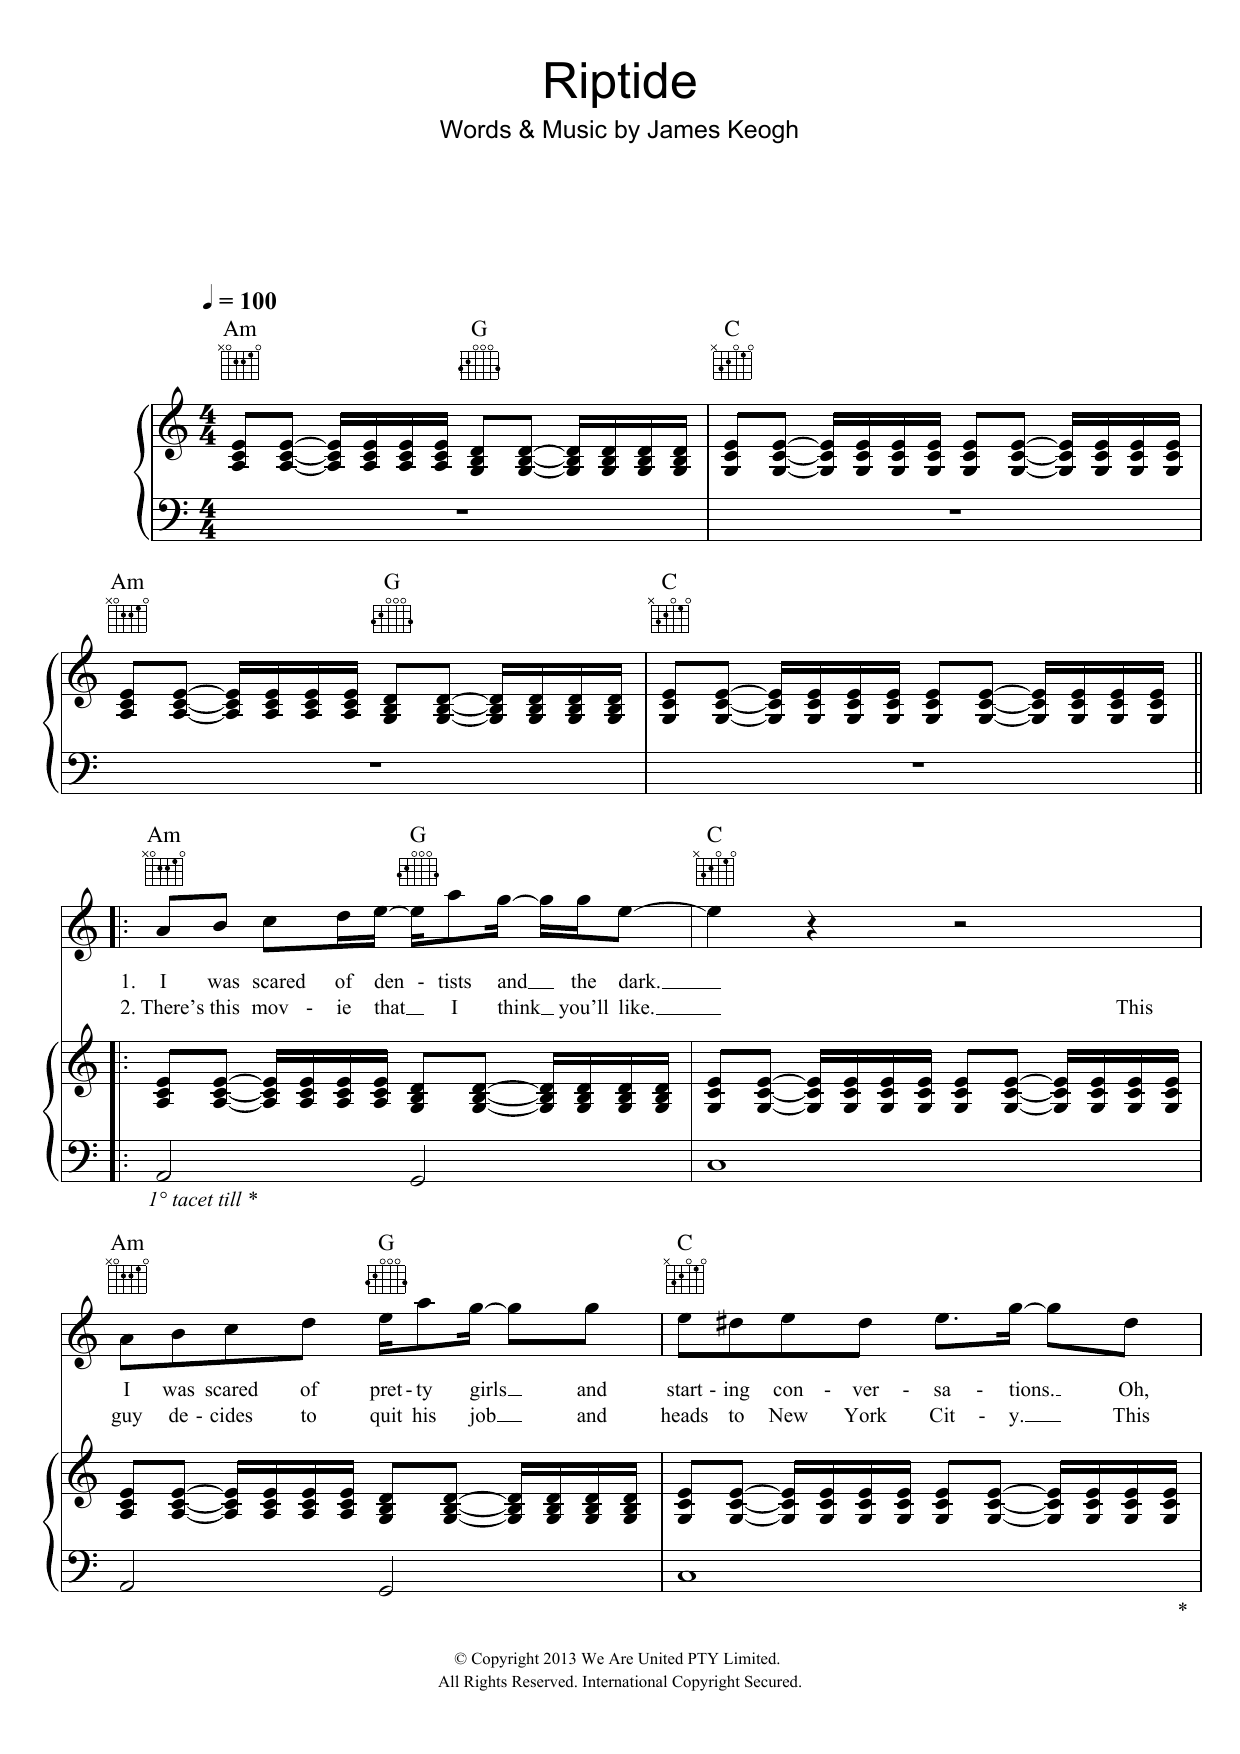 Vance Joy Riptide Sheet Music Notes & Chords for SPREP - Download or Print PDF